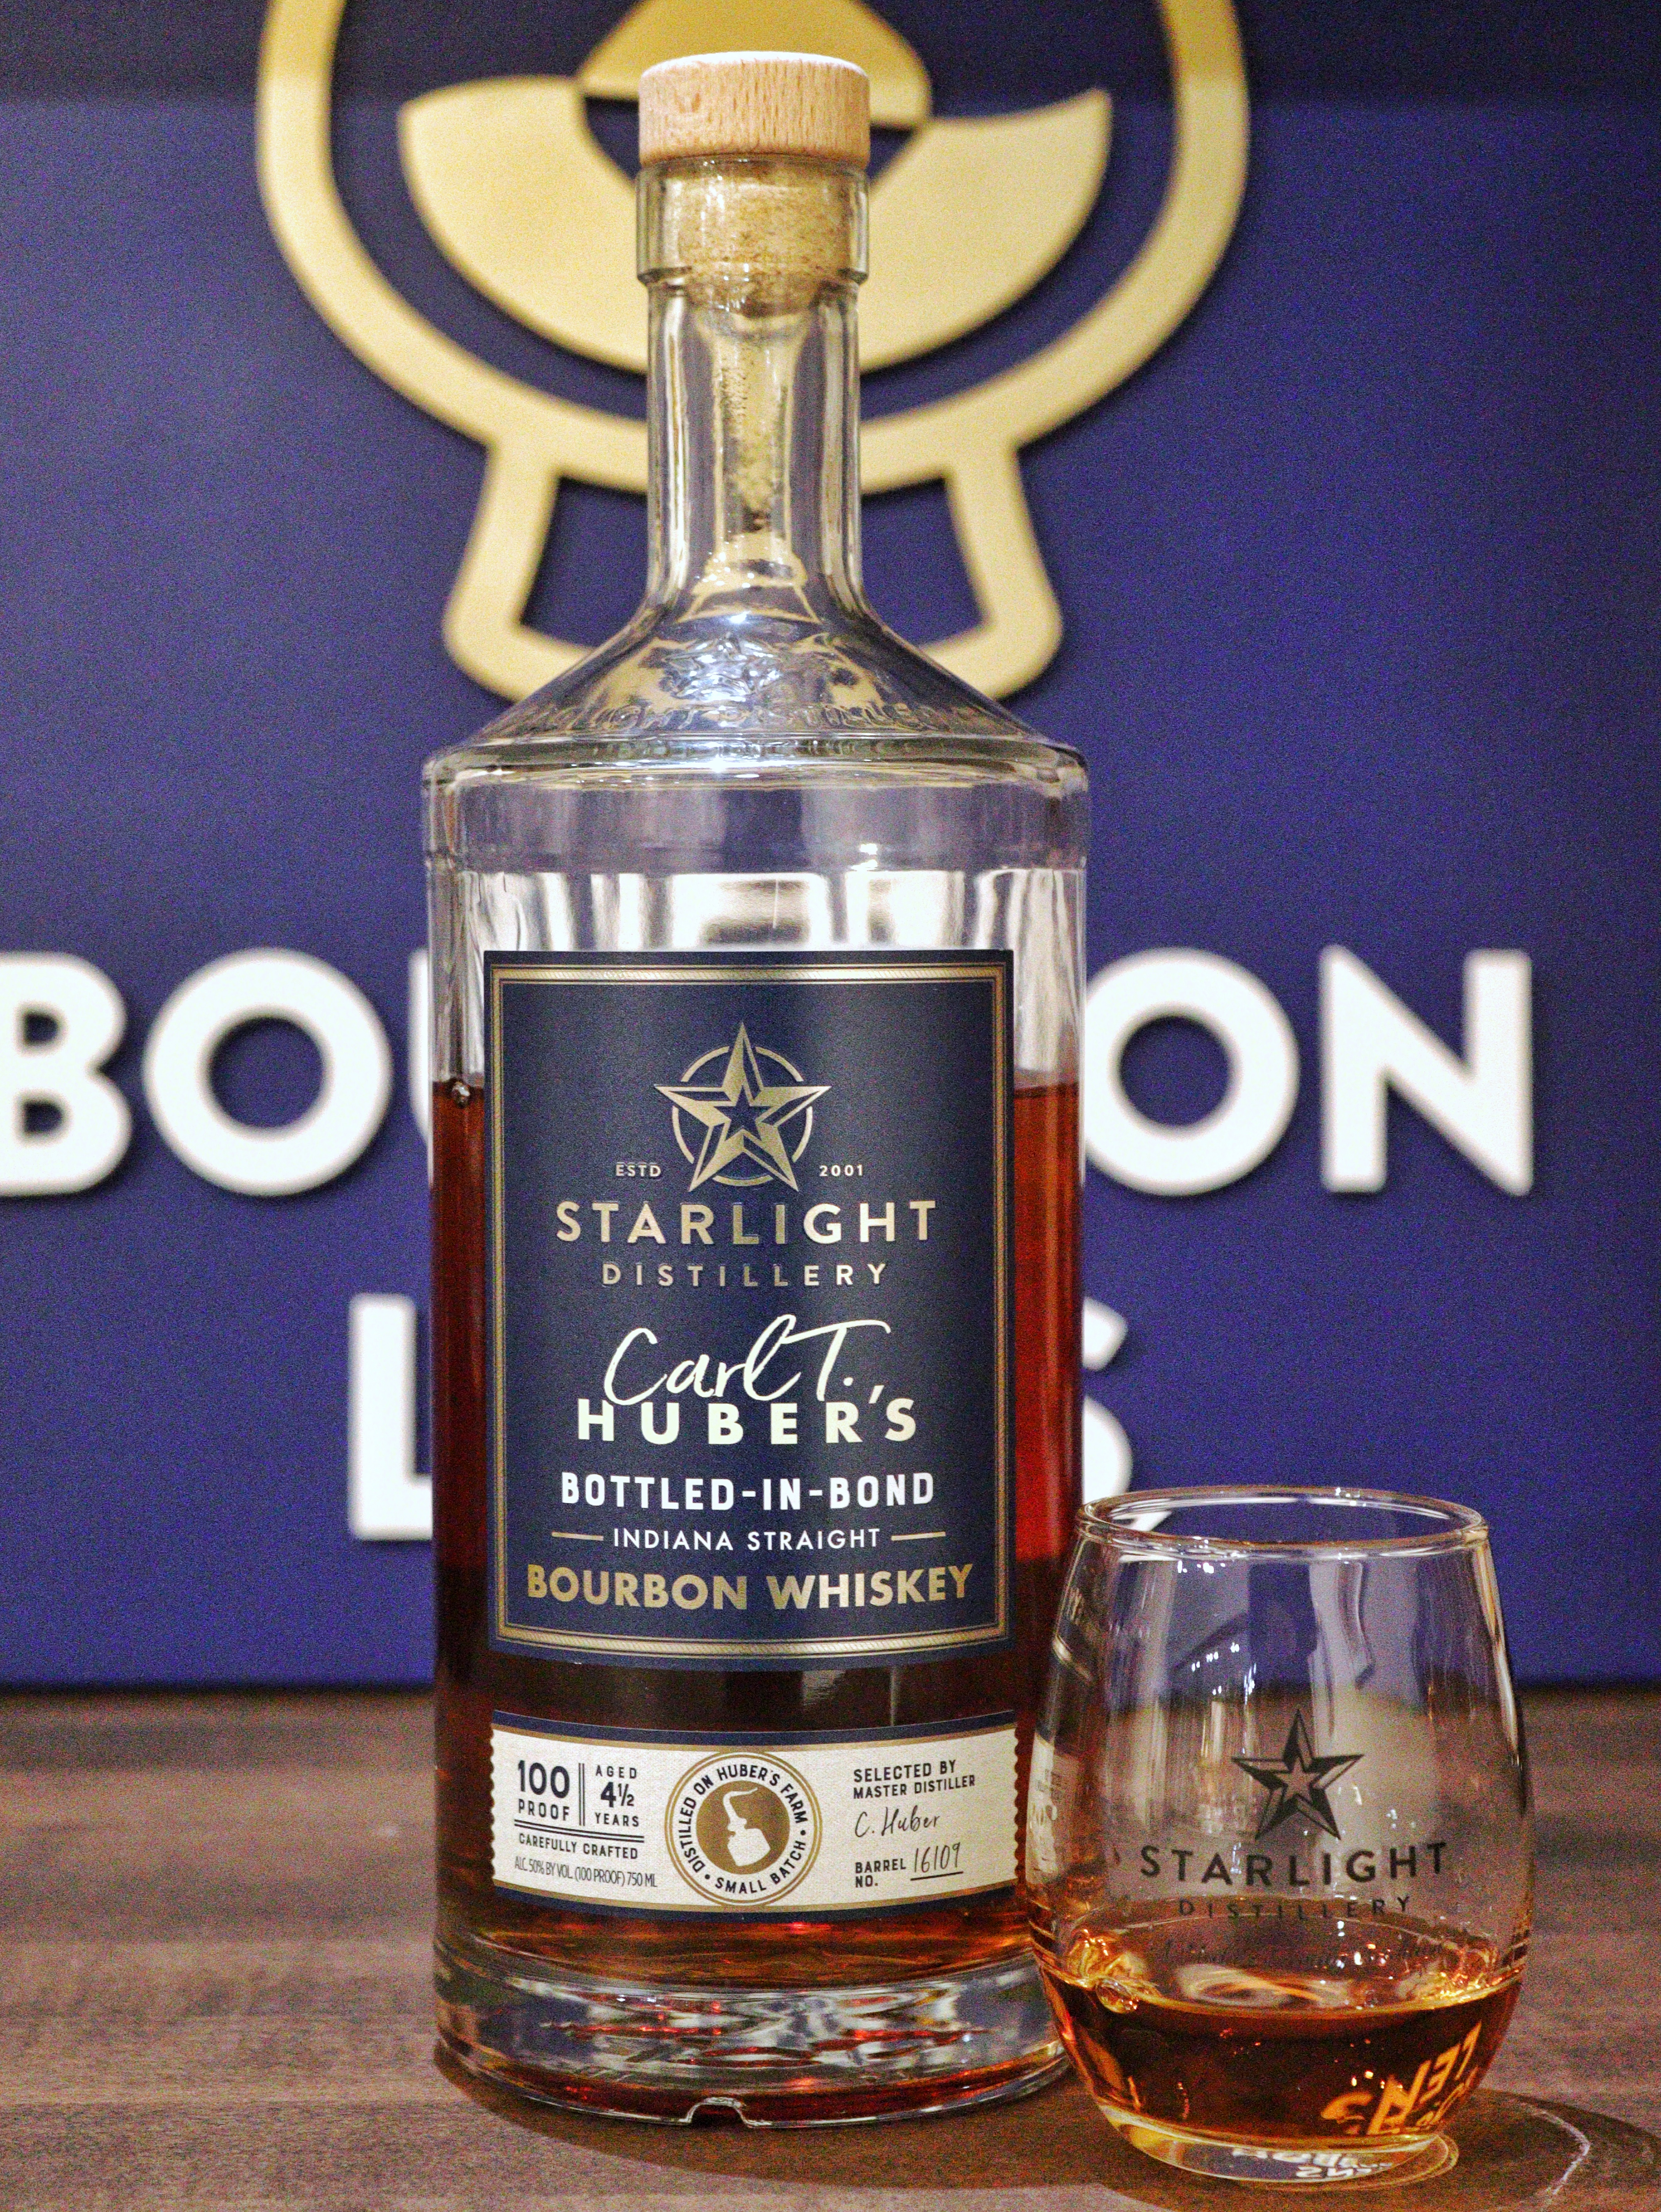 Indiana Bourbon, Starlight, Bottle In Bond